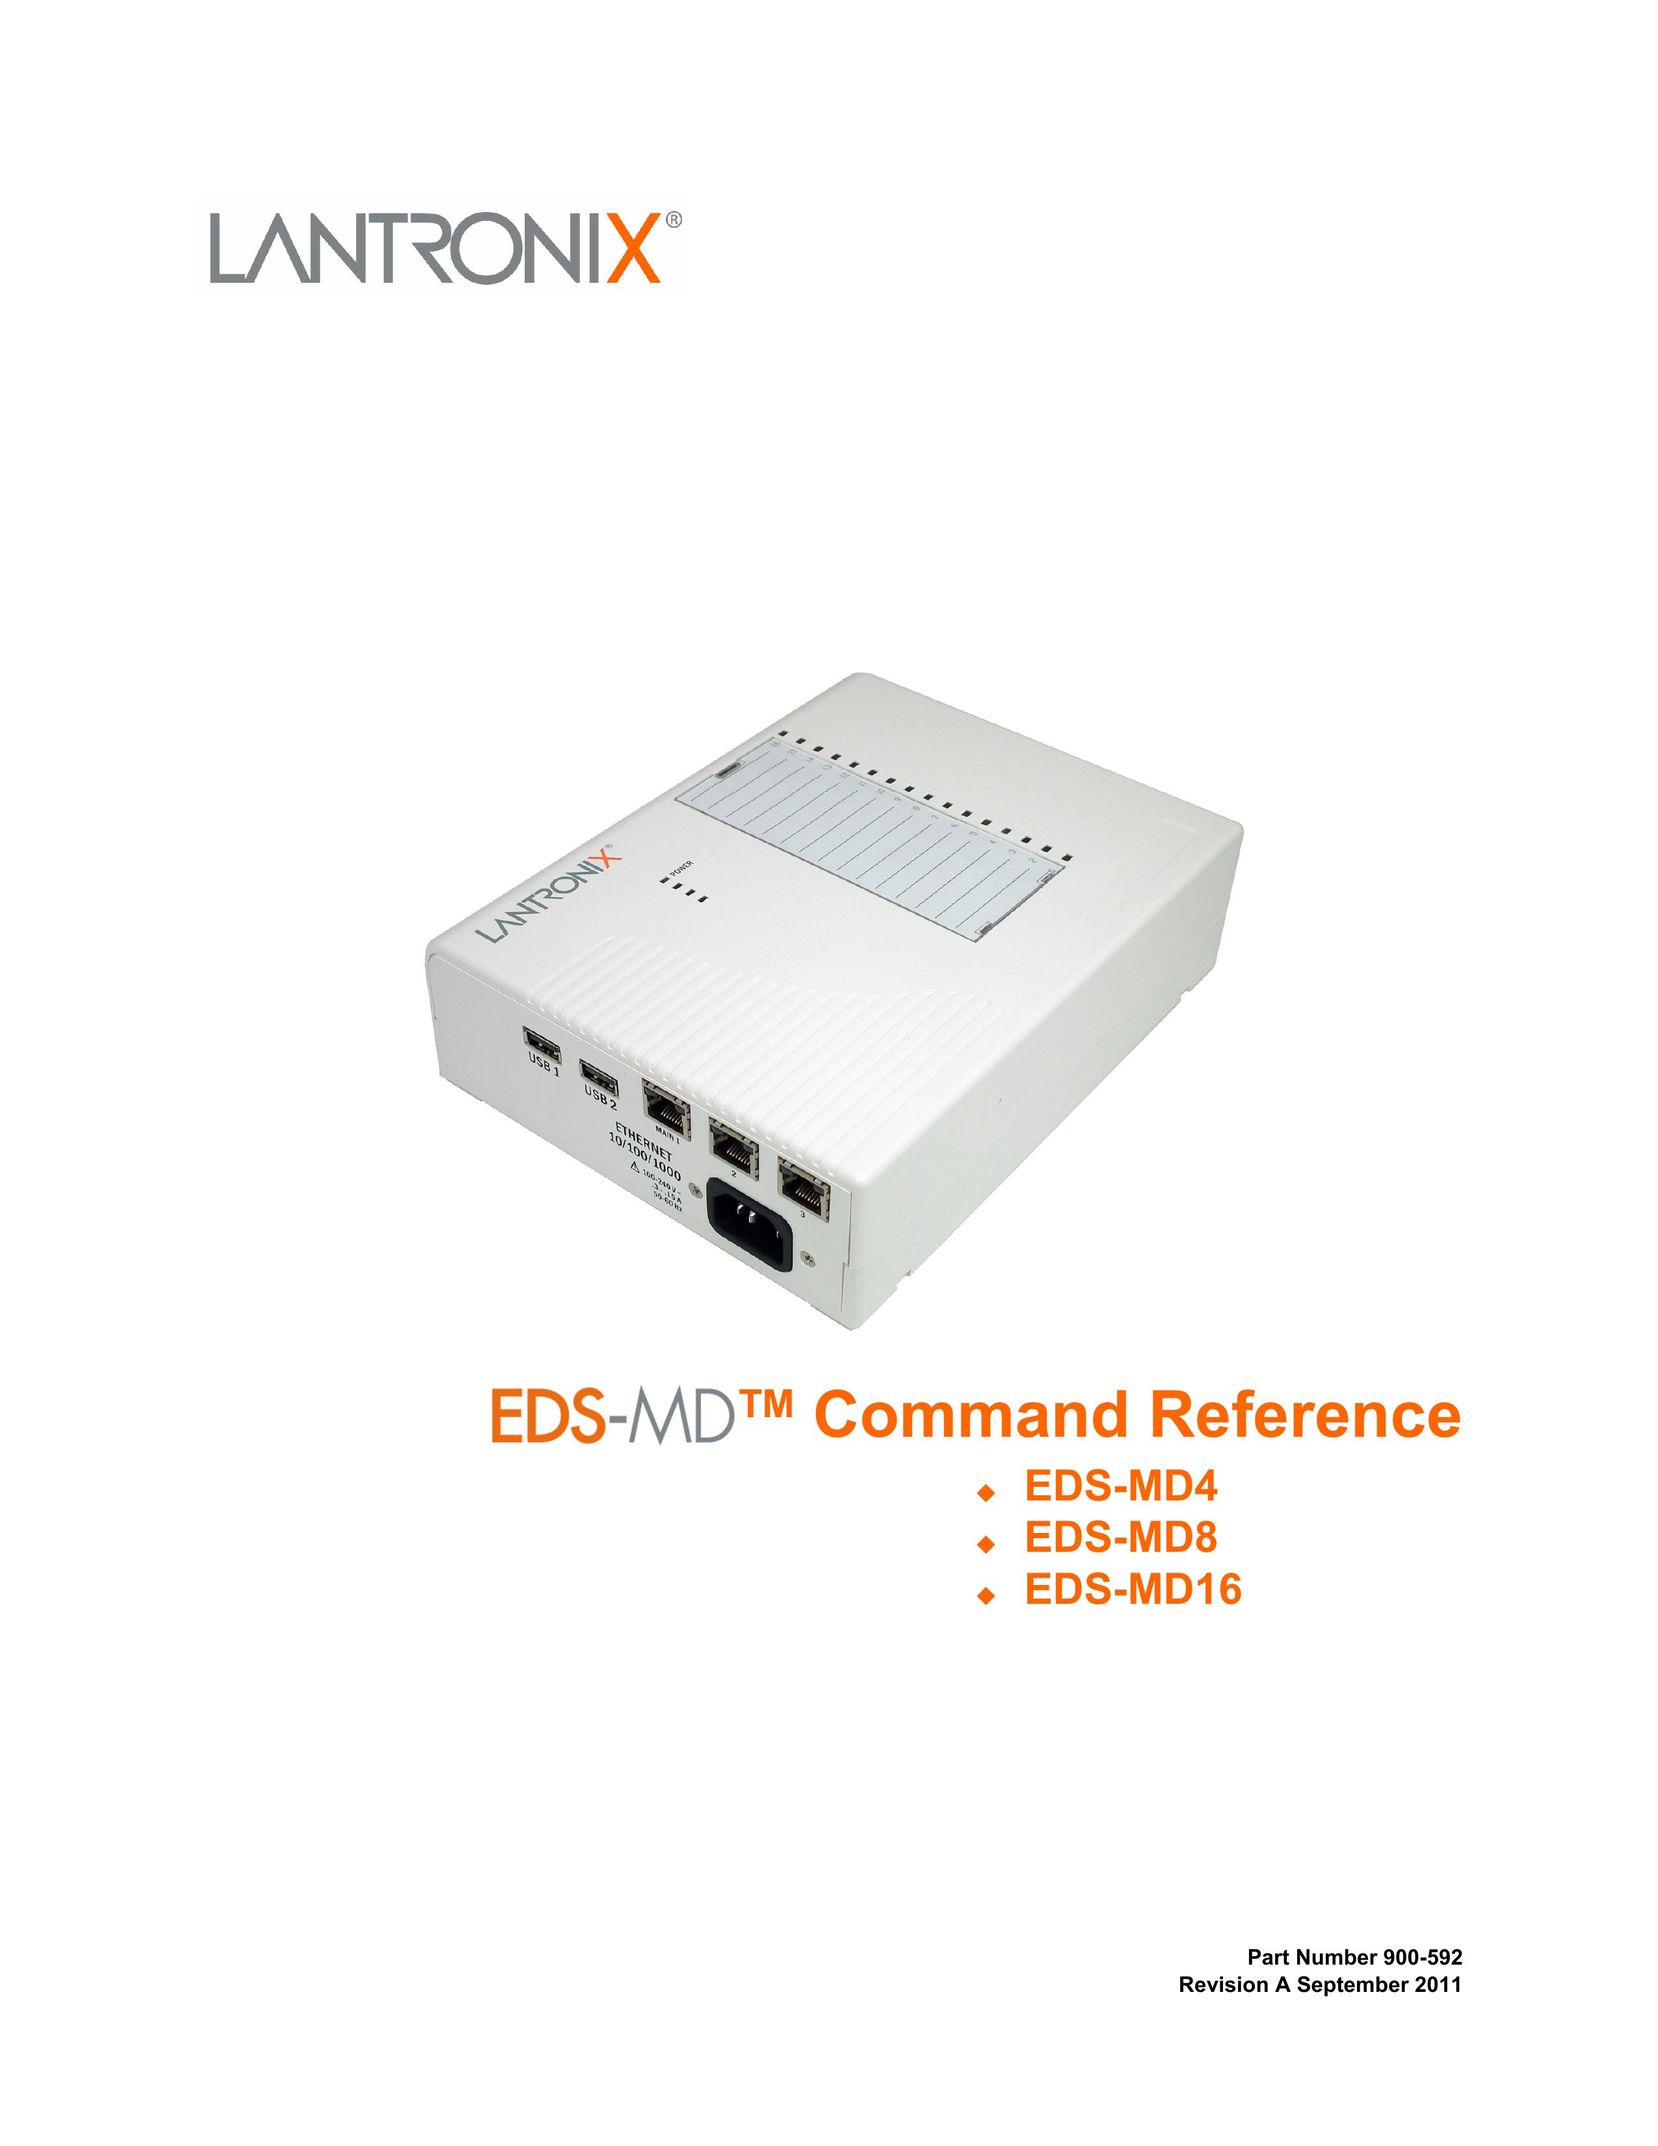 Lantronix EDS-MD16 Switch User Manual